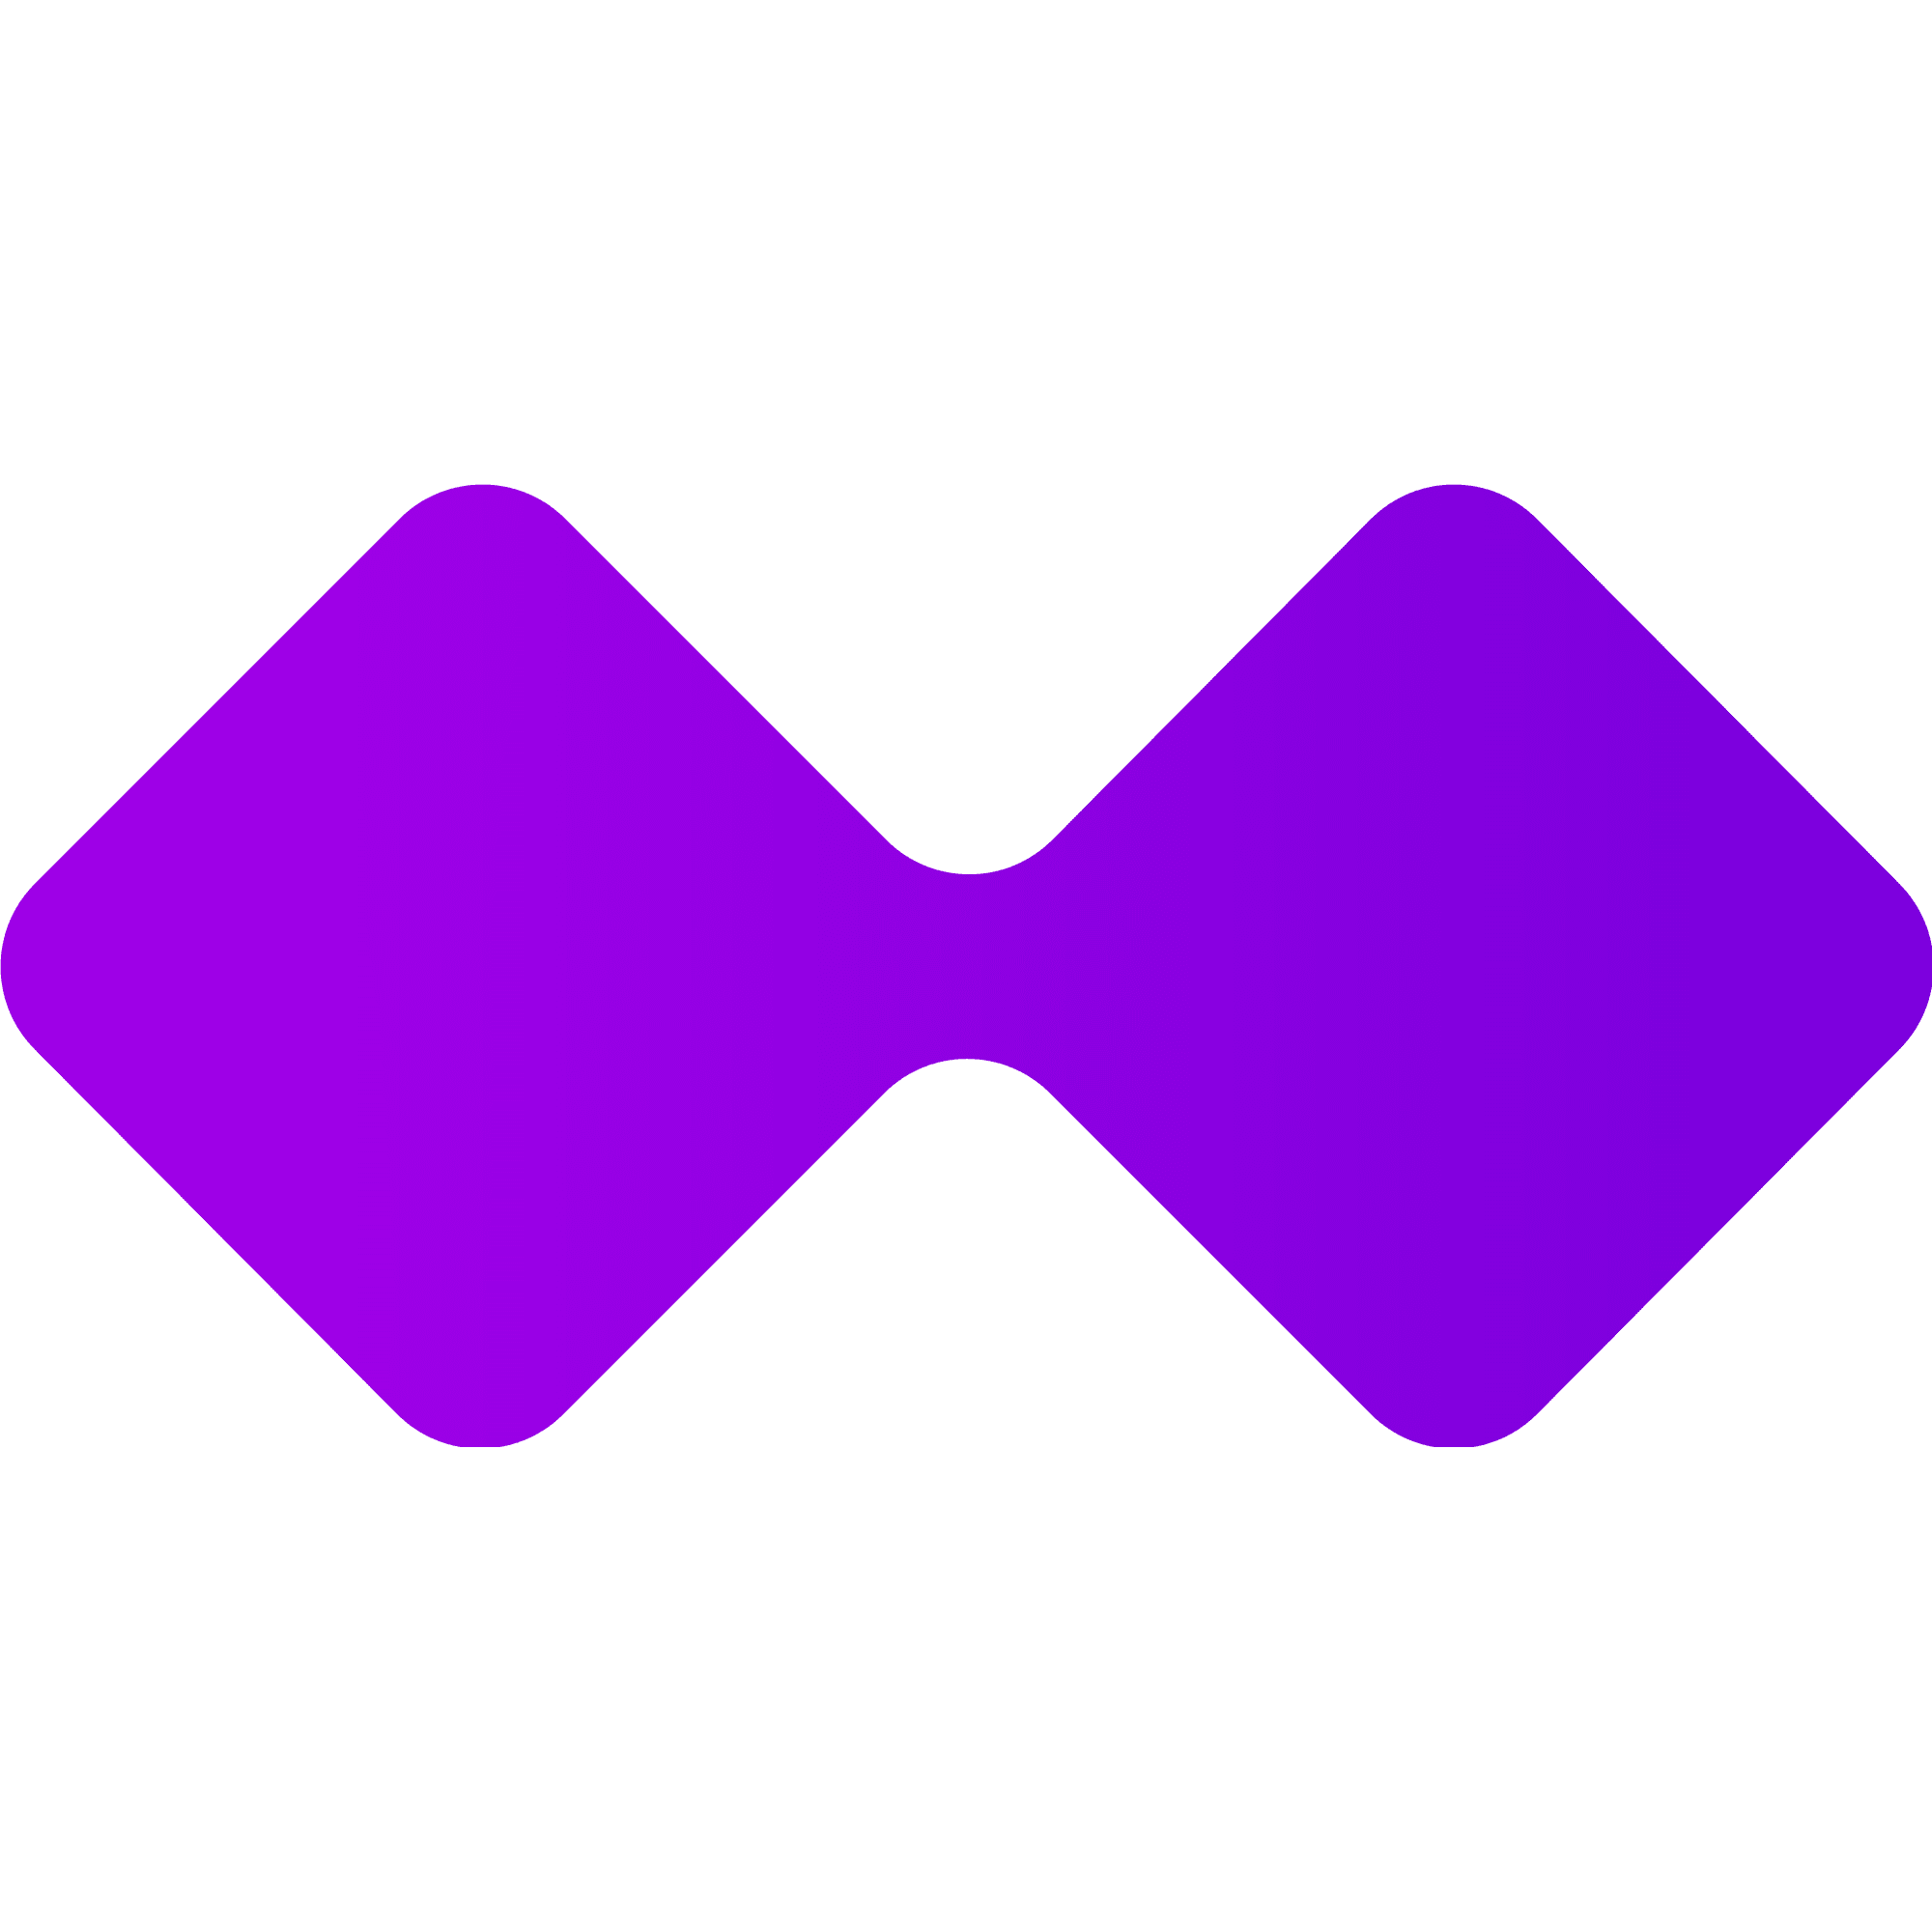 MimbleWimbleCoin logo in png format